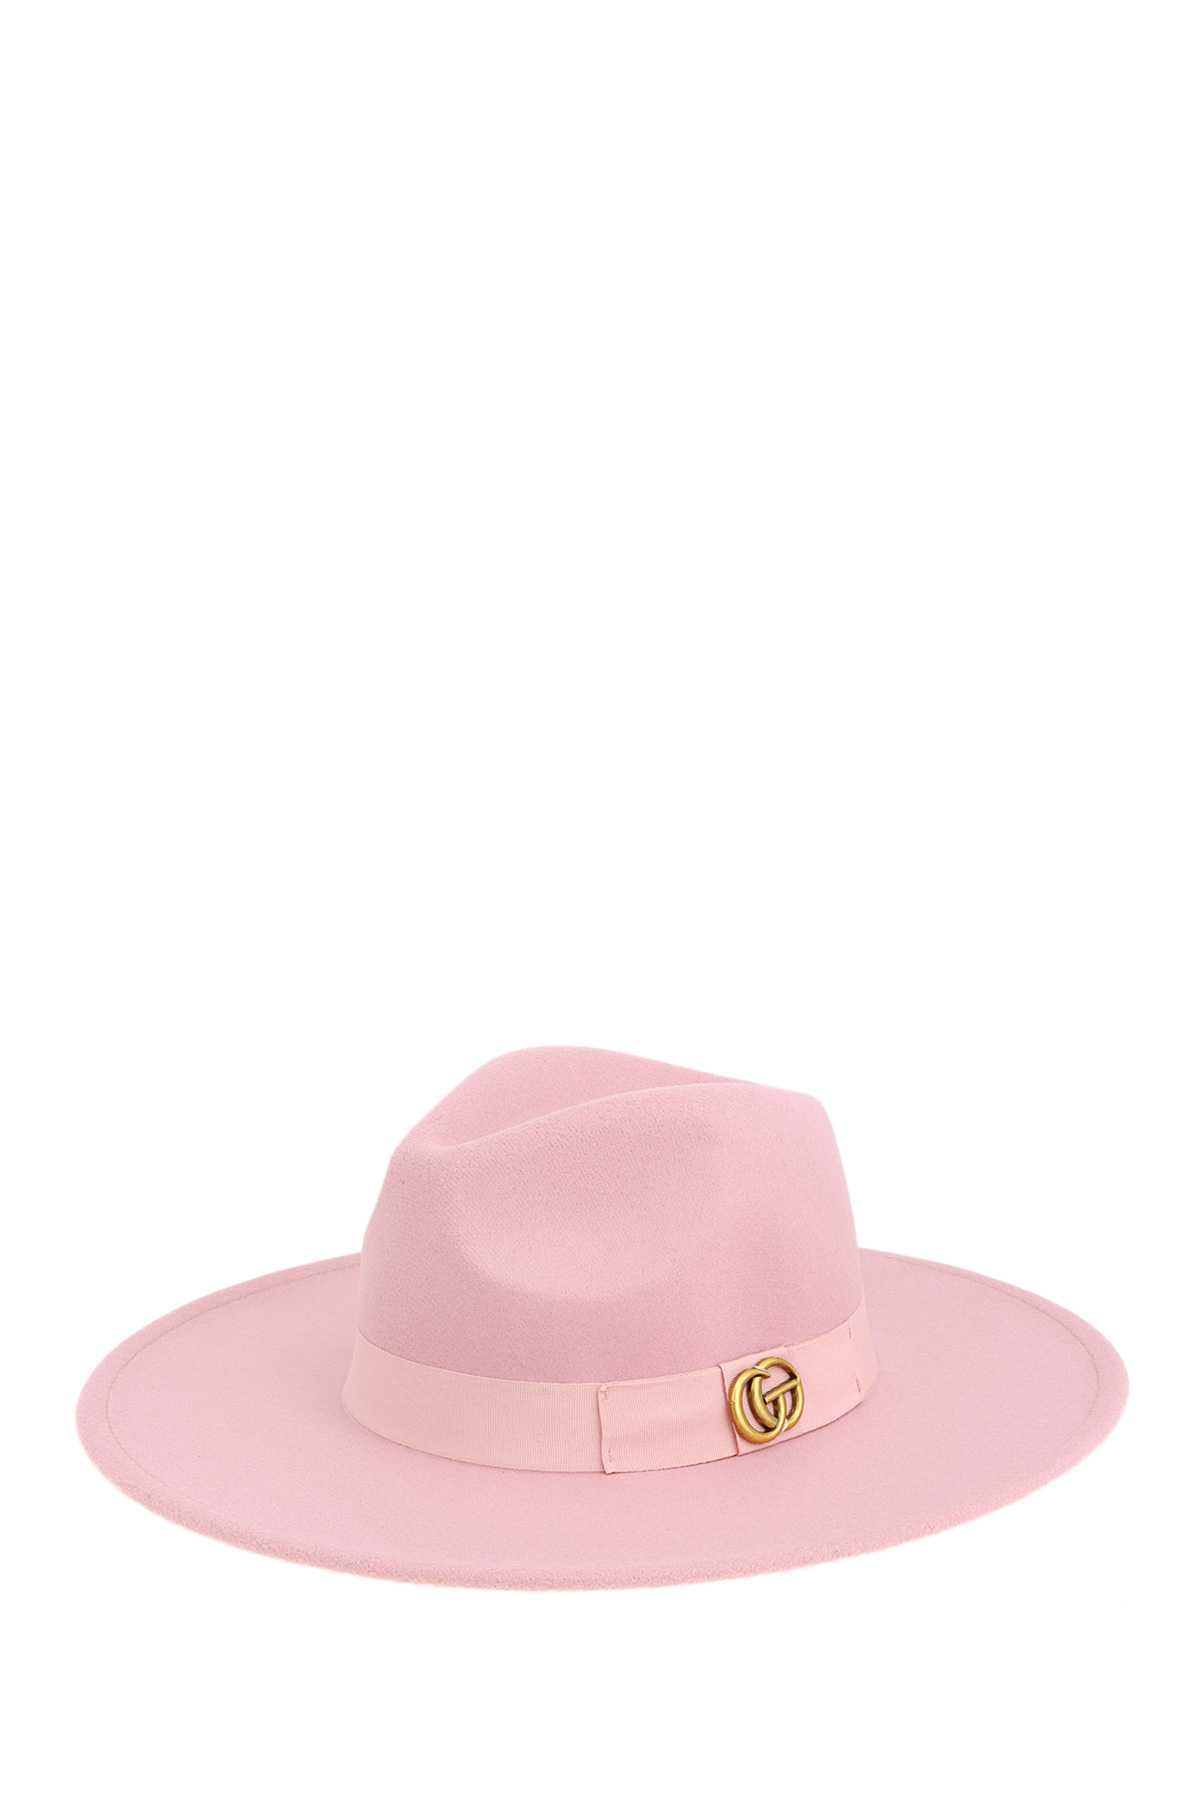 GO Stitched Fedora Top Felt Hat